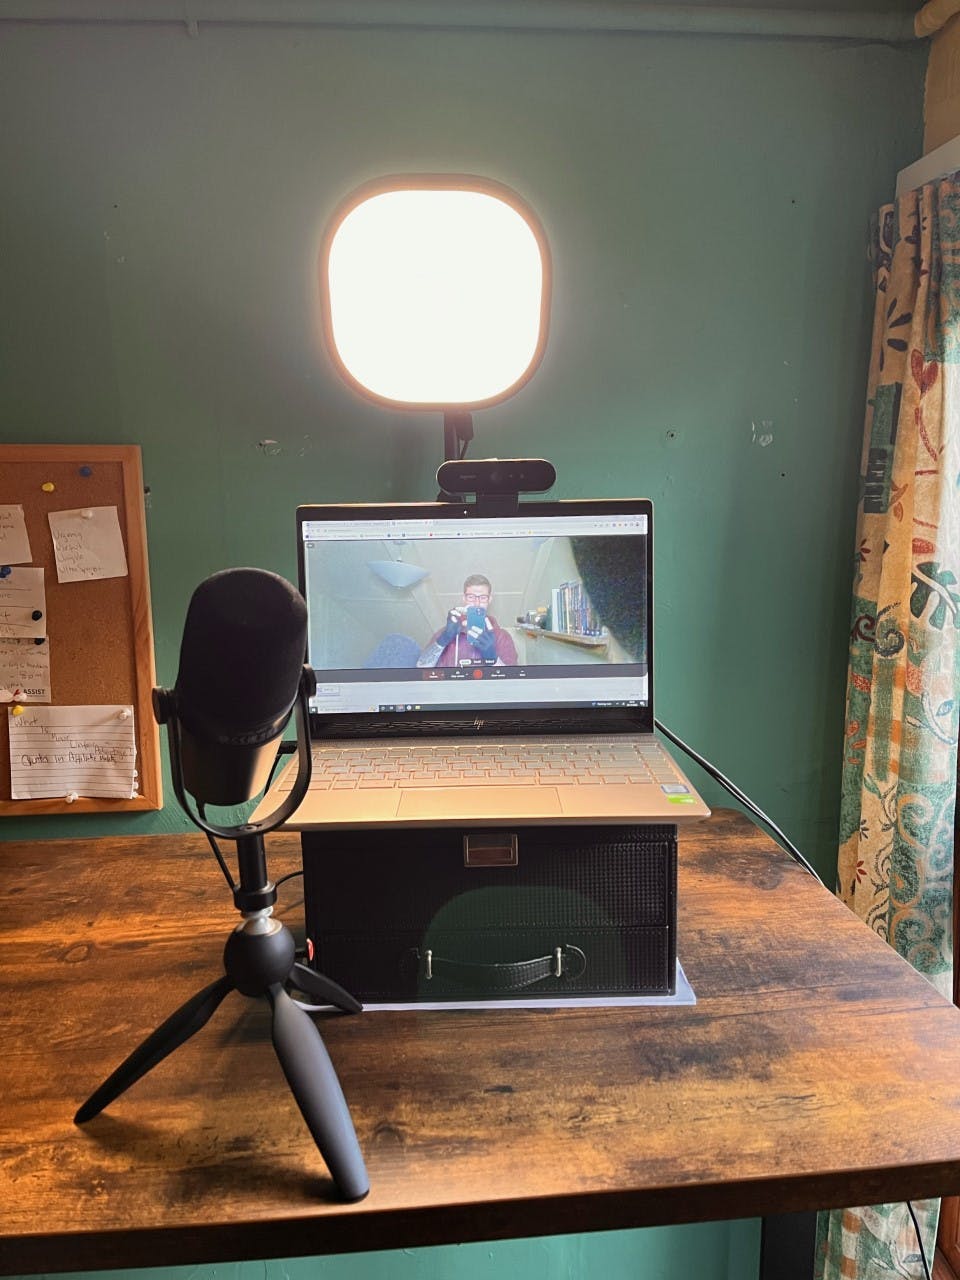 Setup for recording online course videos